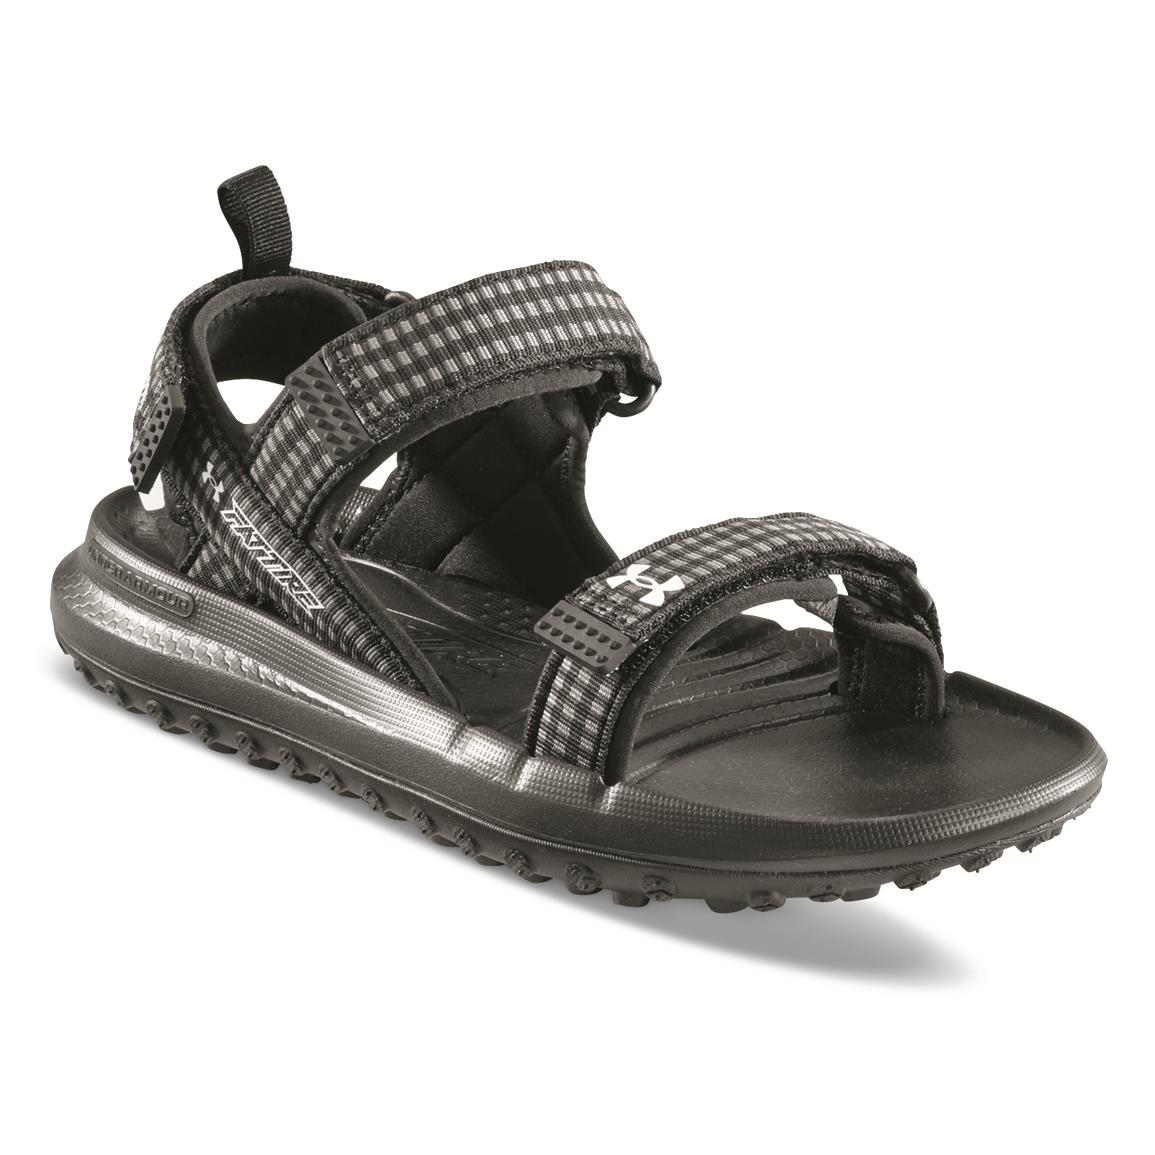 Under Armour Men's Fat Tire Hiking Sandals, Black/black/white